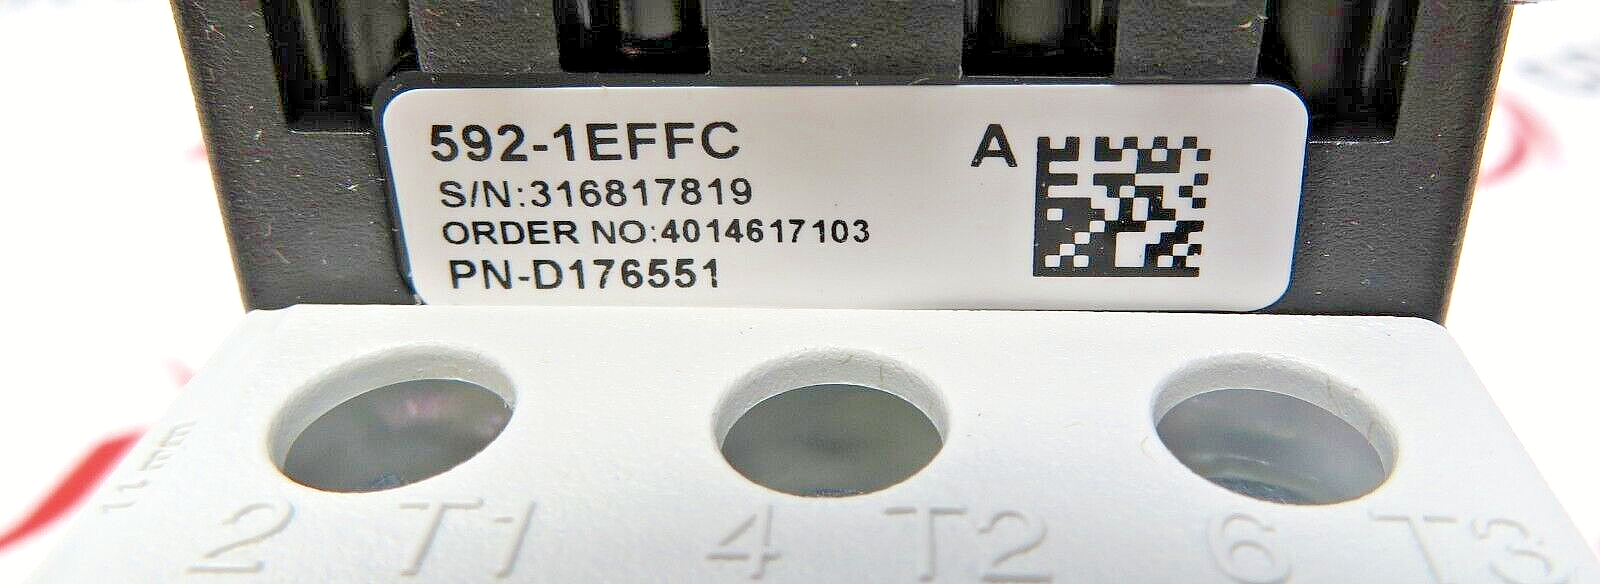 Allen-Bradley 592-1EFFC E100 Electronic 11-55A Overload Relay